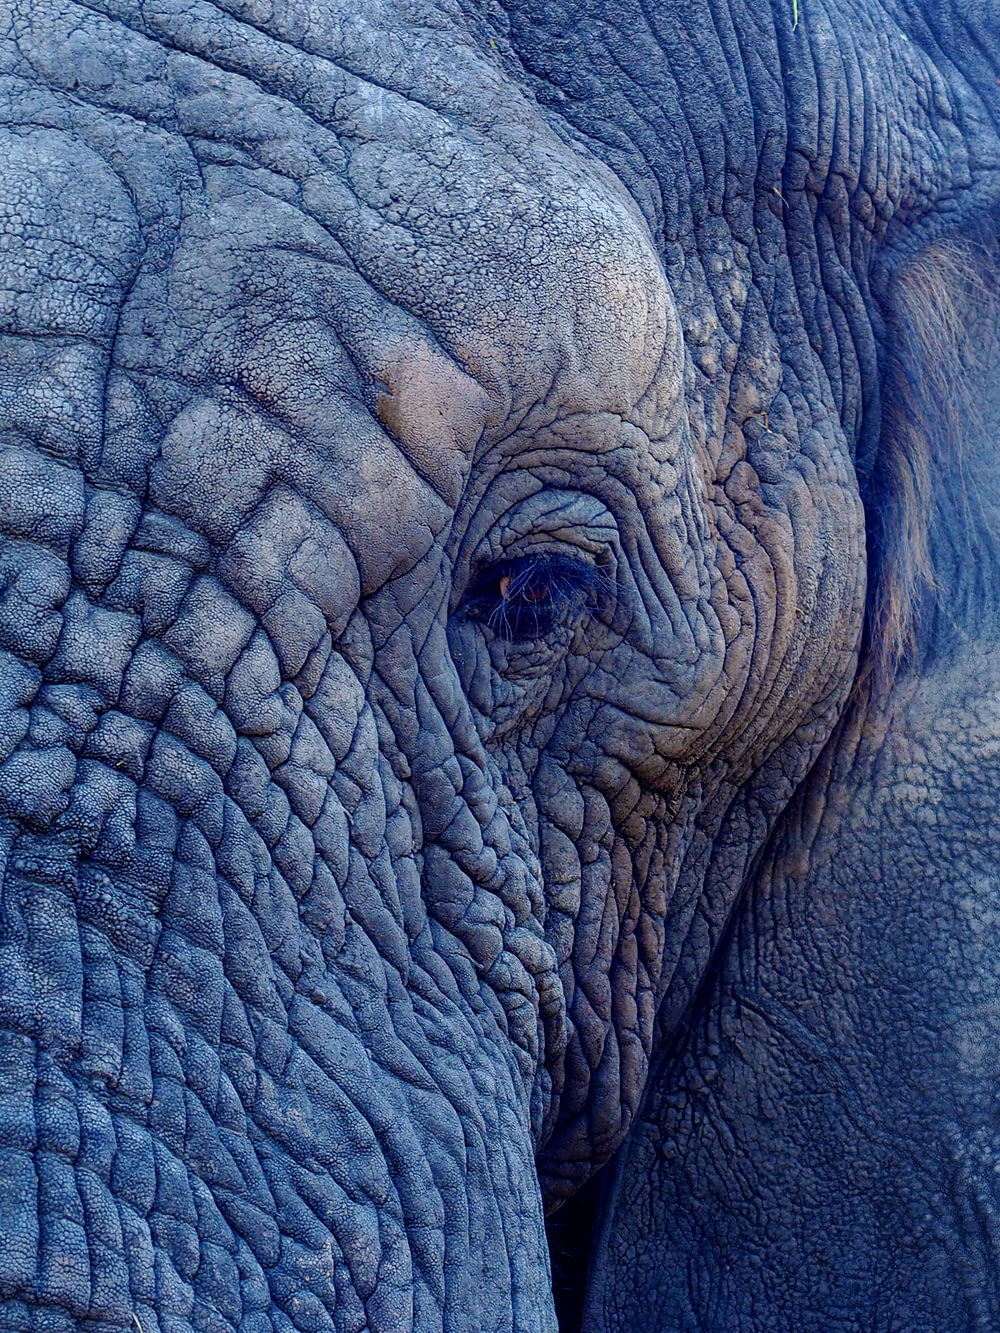 macro photography of elephant's face